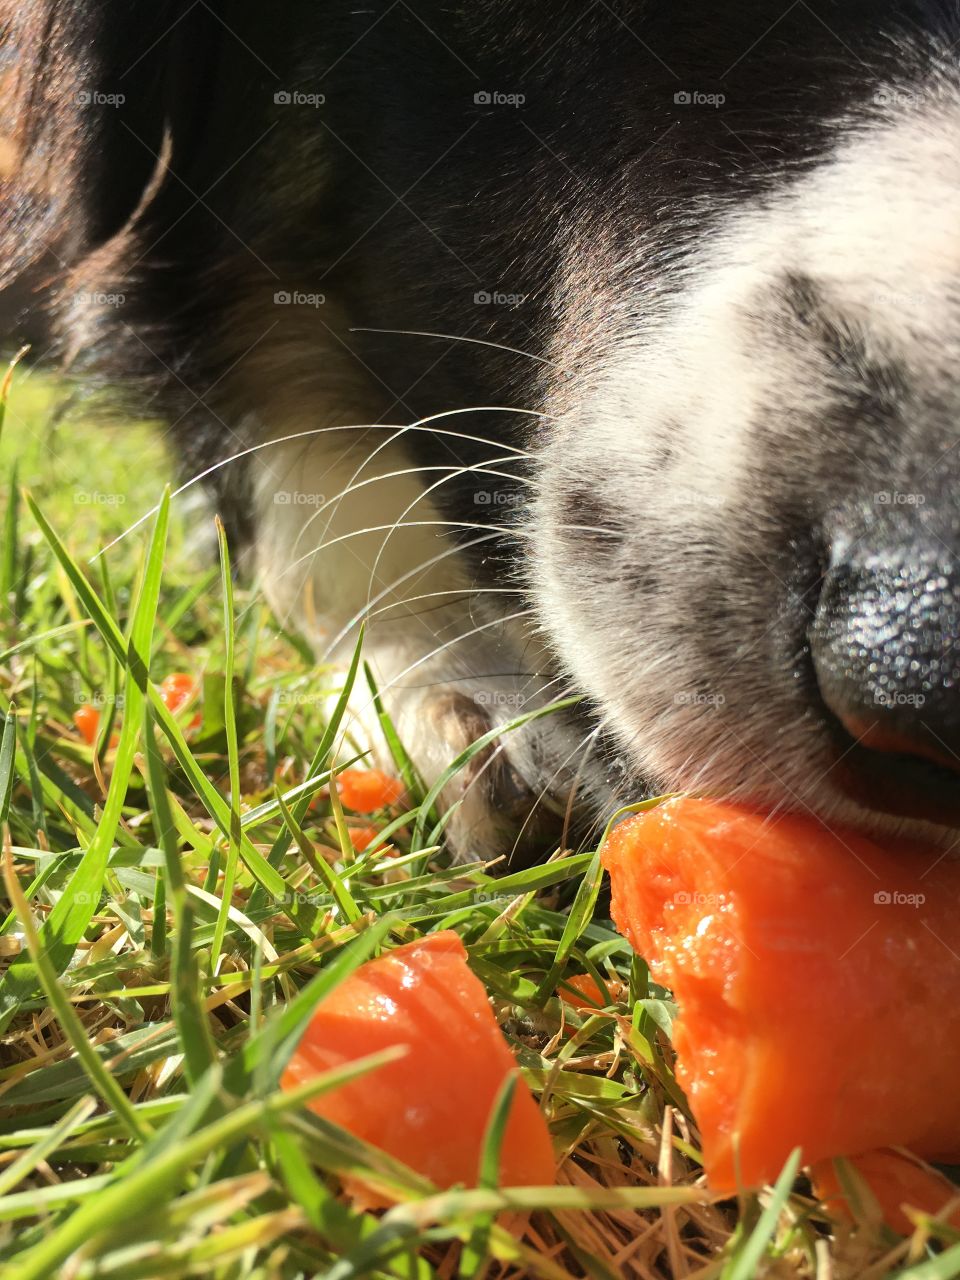 peter the border collie closeup eating carrot